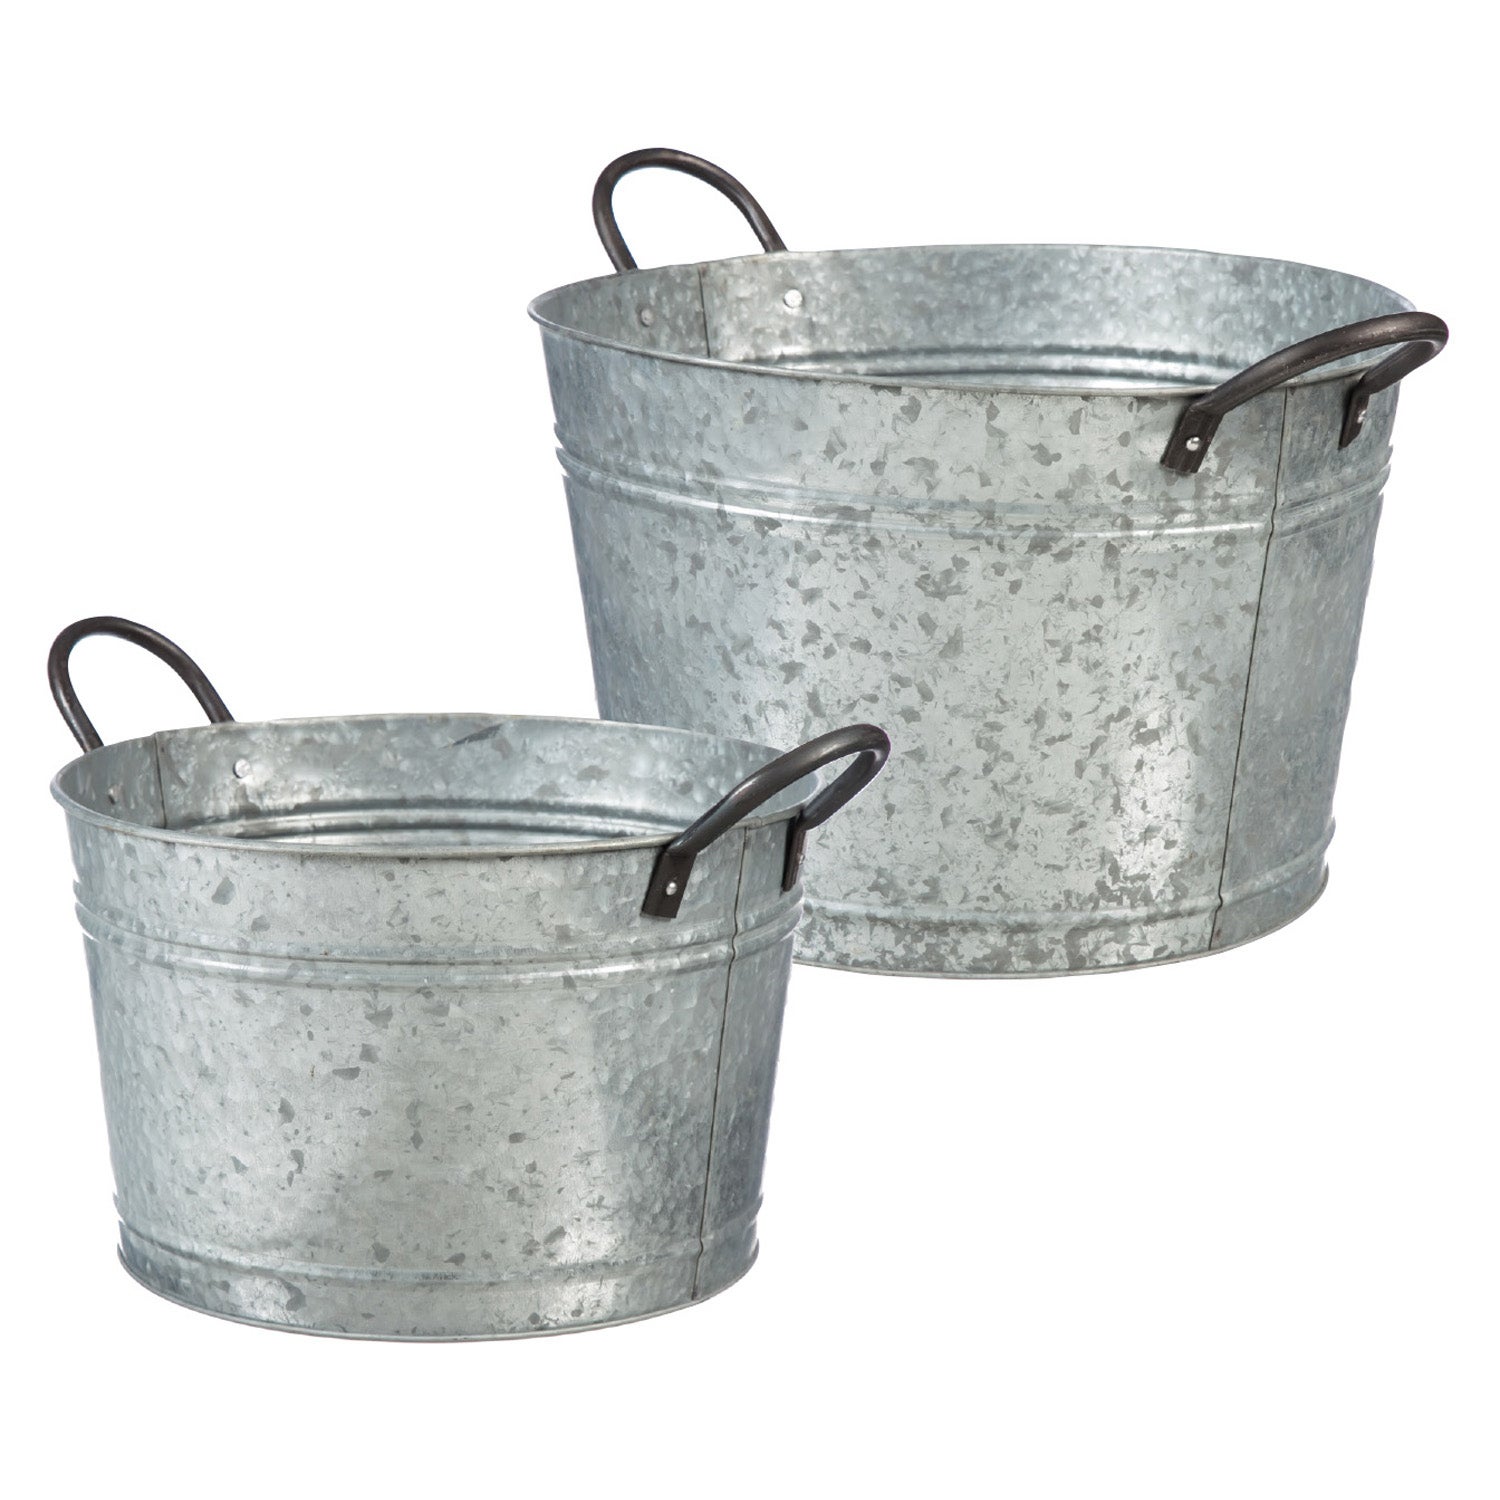 Galvanized Metal Outdoor-Safe Buckets, Set of 2